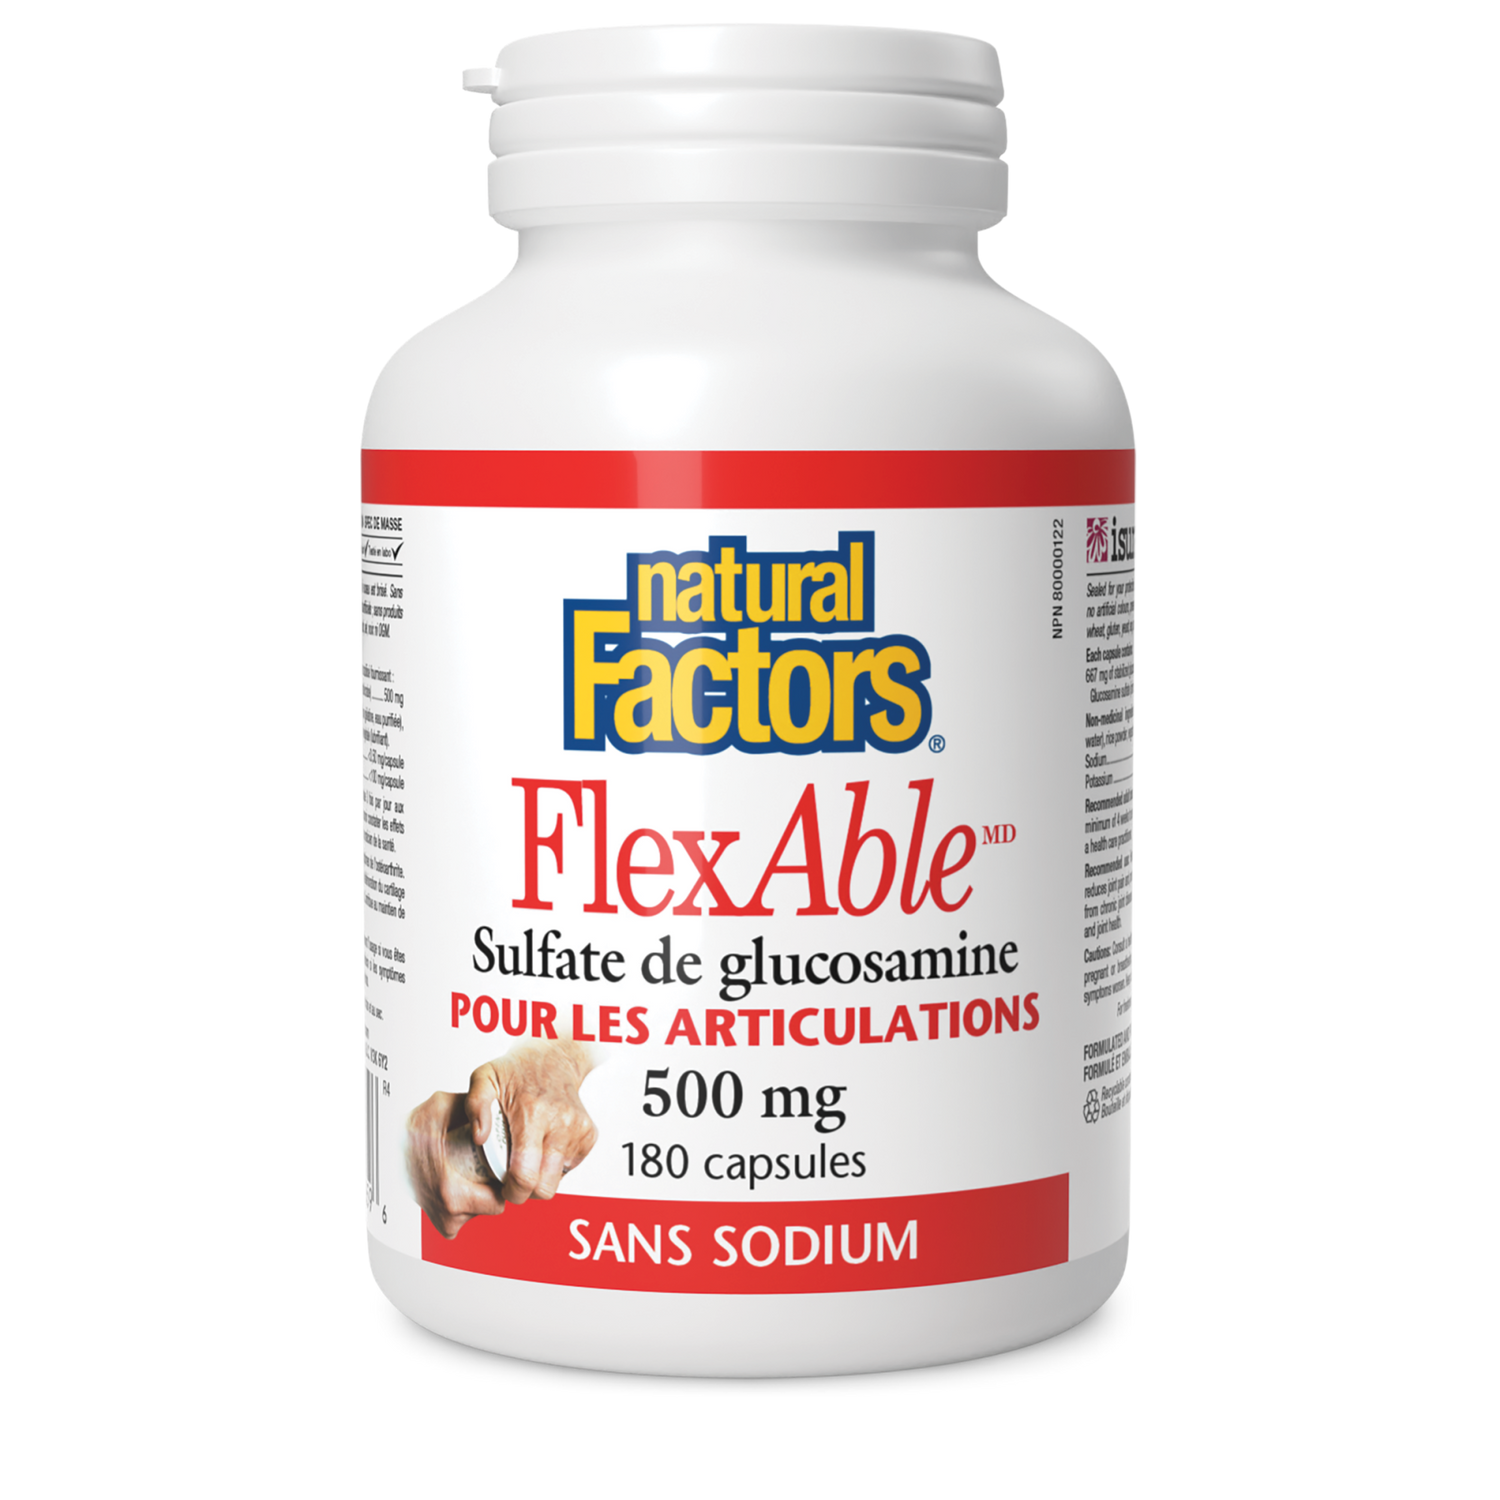 FlexAble Sulfate de glucosamine 500 mg, Natural Factors|v|image|2659